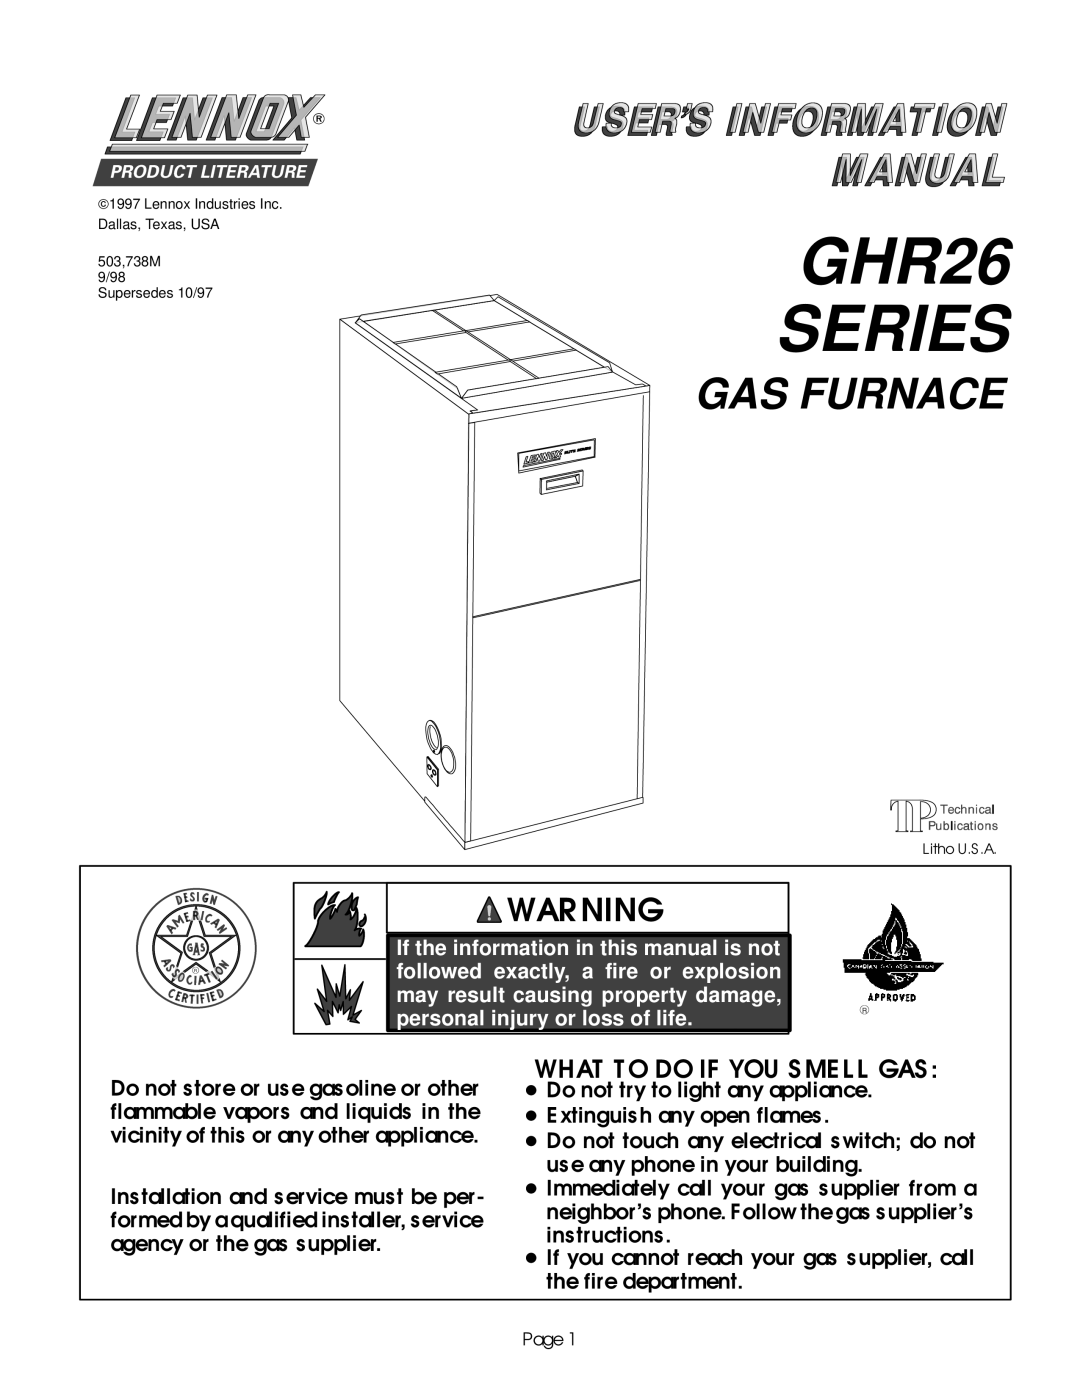 Lennox International Inc manual GHR26 SERIES, Gas Furnace, War Ning, What T O Do If You S Me L L Gas 